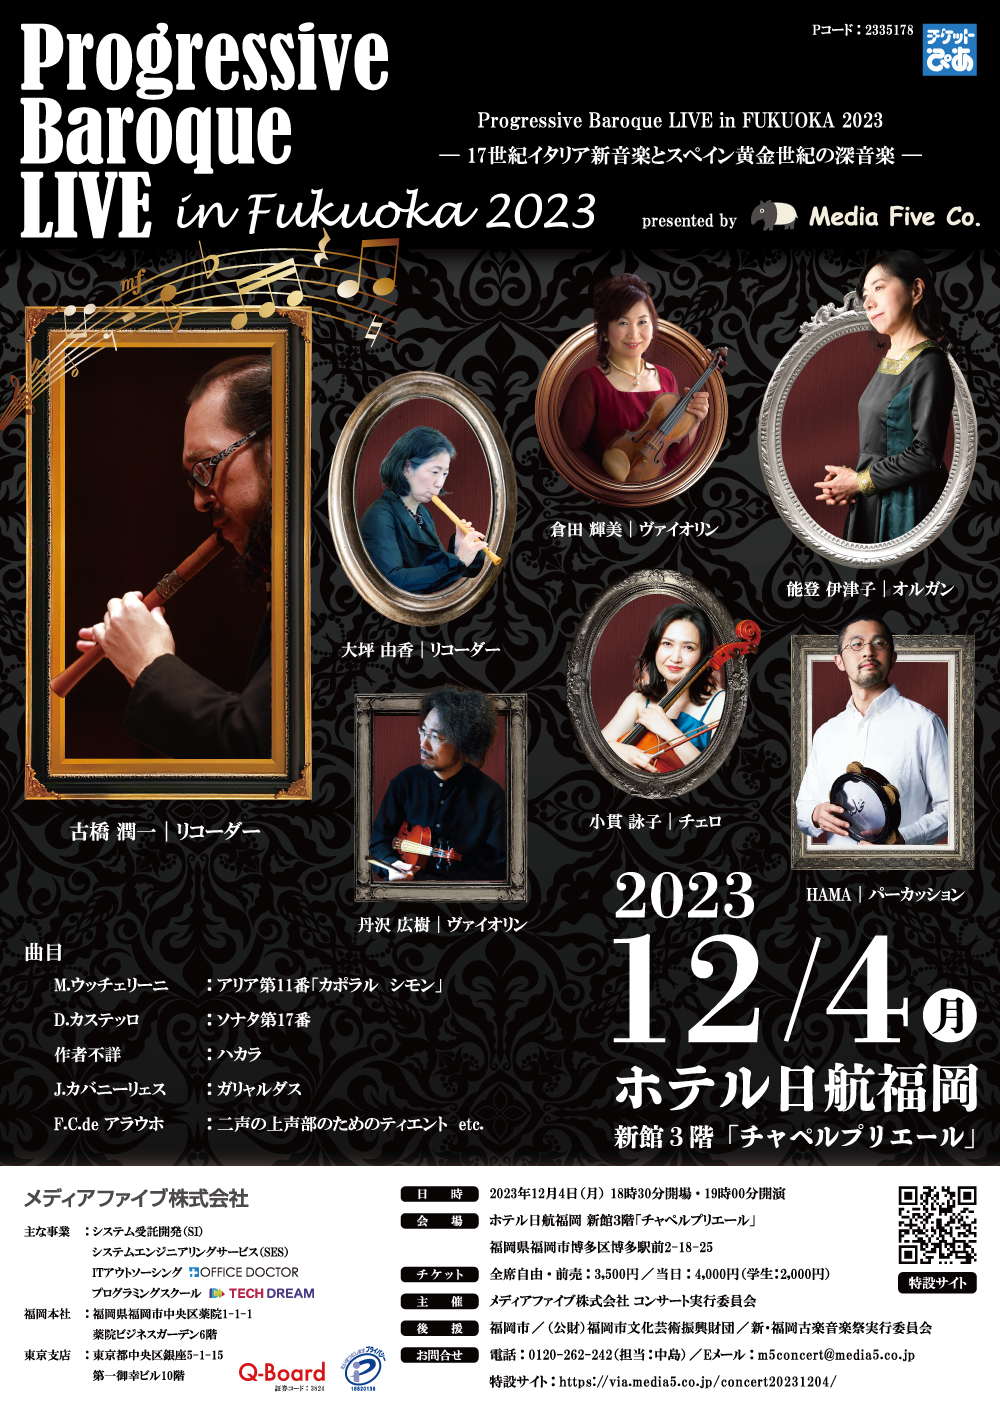 Progressive Baroque LIVE in FUKUOKA 2023